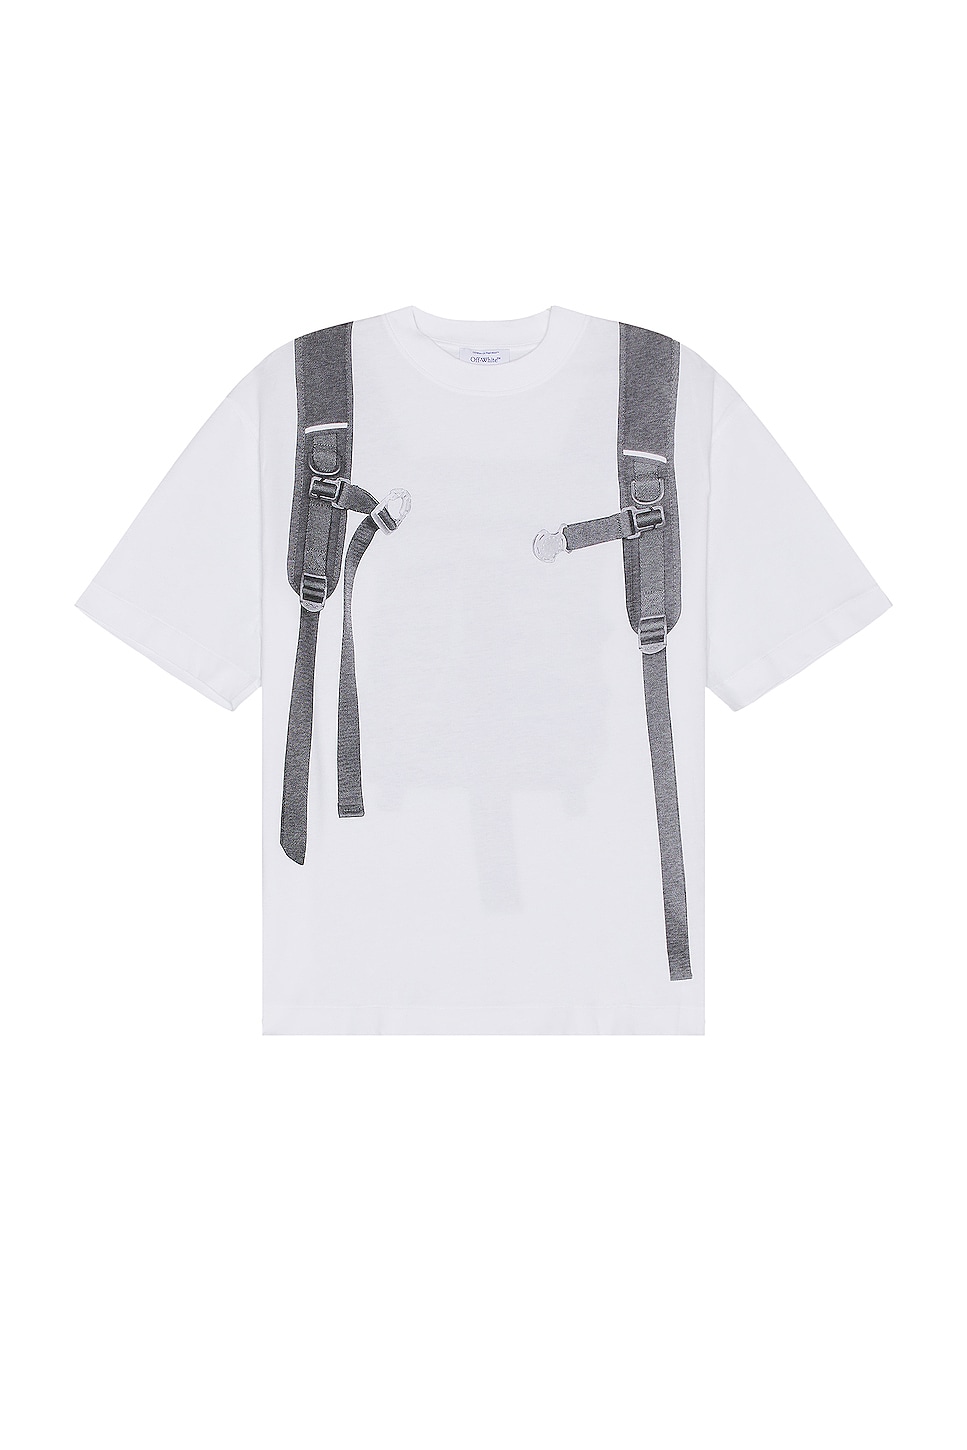 Image 1 of OFF-WHITE Backpack Skate Tee in White & Black